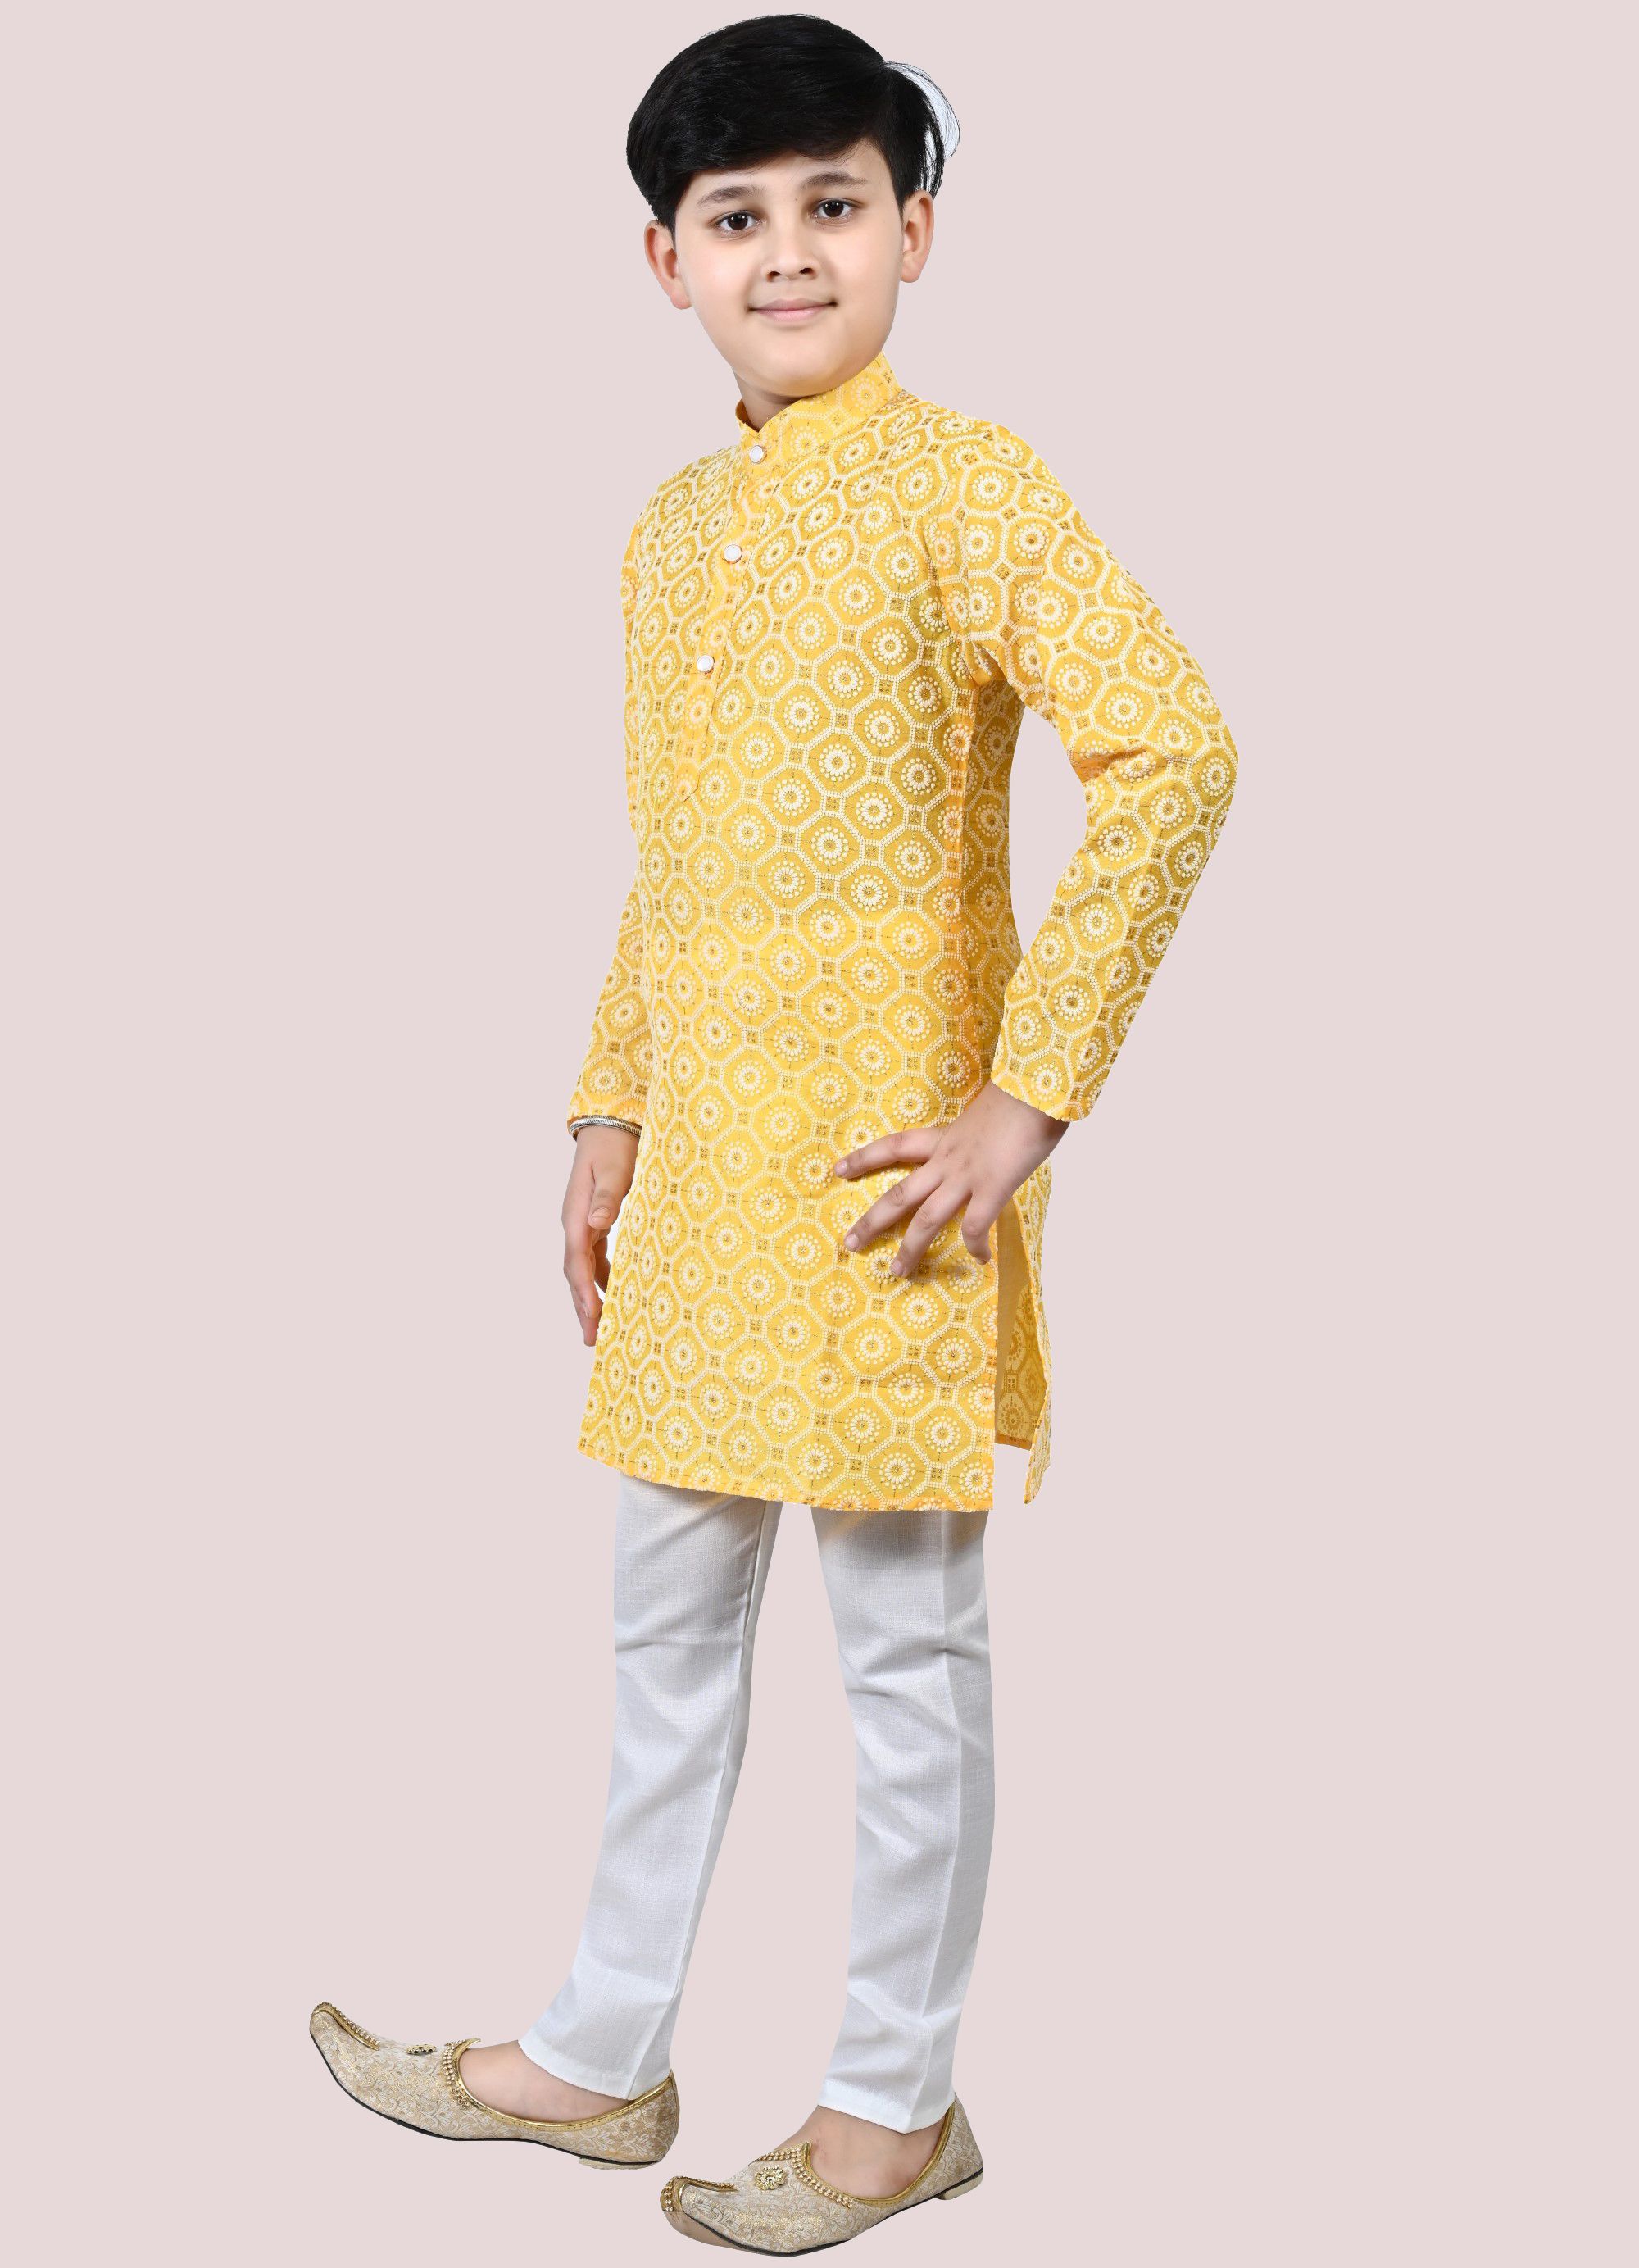     			Arshia Fashions - Yellow Cotton Blend Boys Kurta Sets ( Pack of 1 )